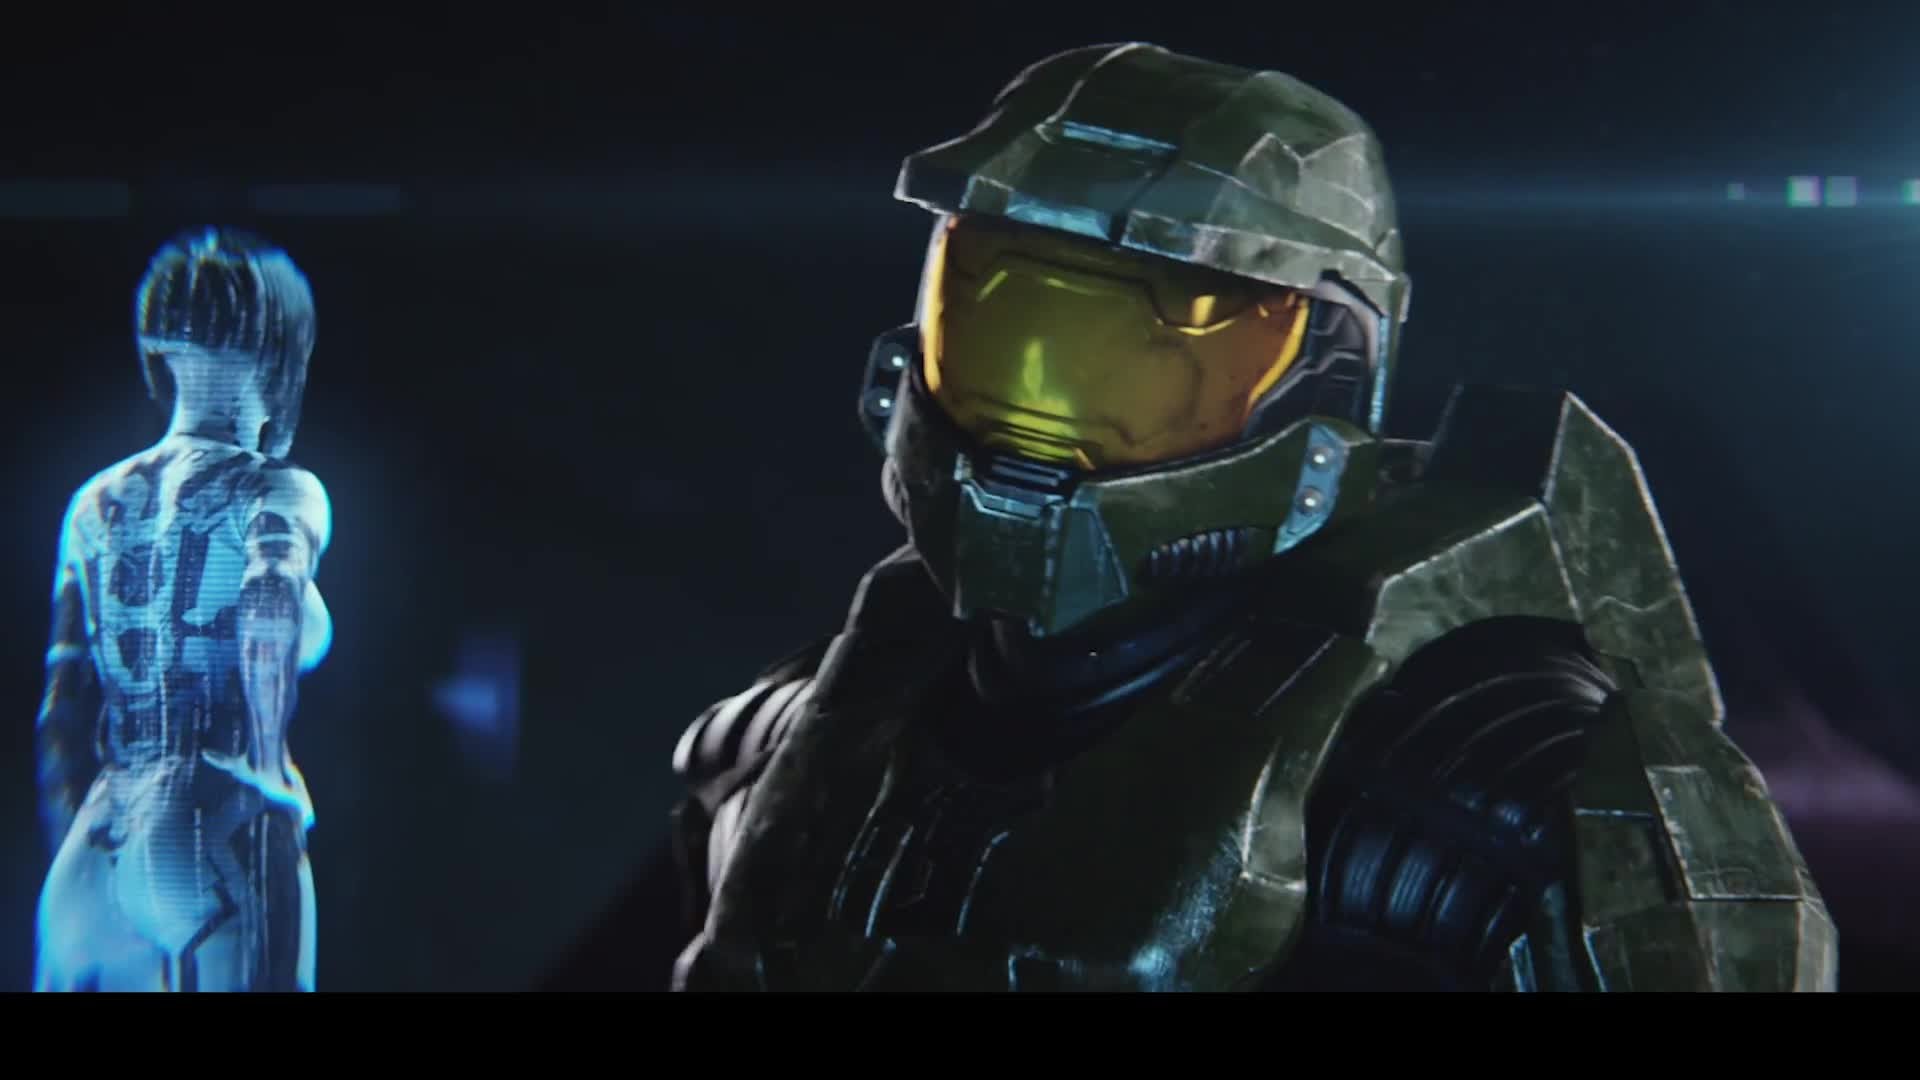 Amazoncom: Halo: Combat Evolved Anniversary: Microsoft